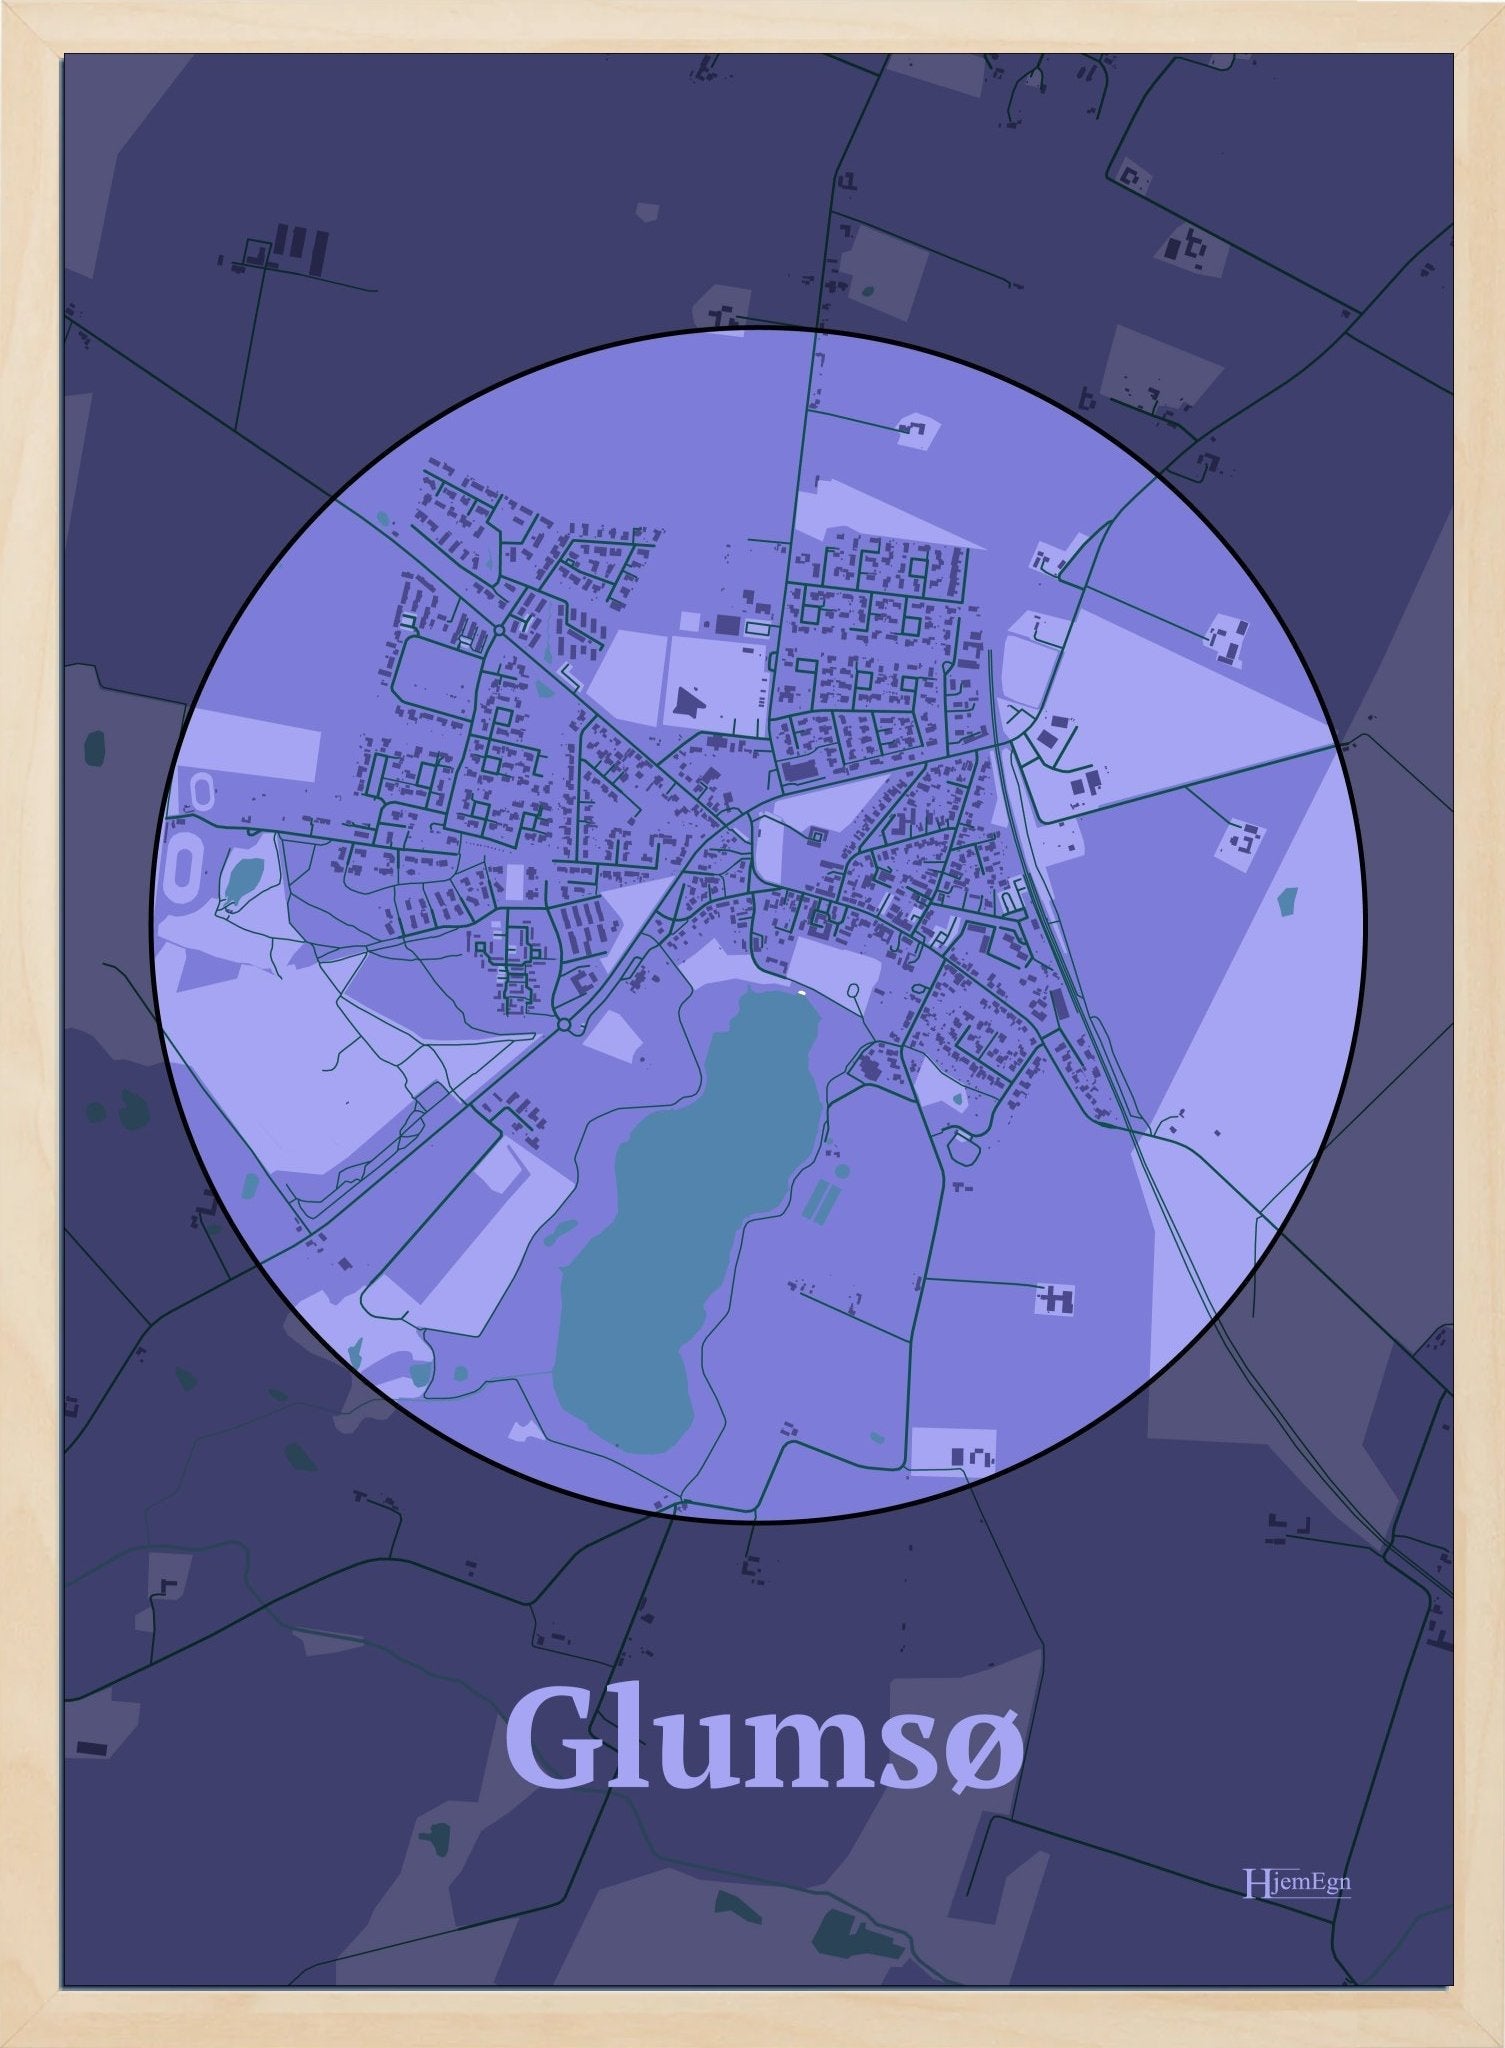 Glumsø plakat i farve pastel lilla og HjemEgn.dk design centrum. Design bykort for Glumsø